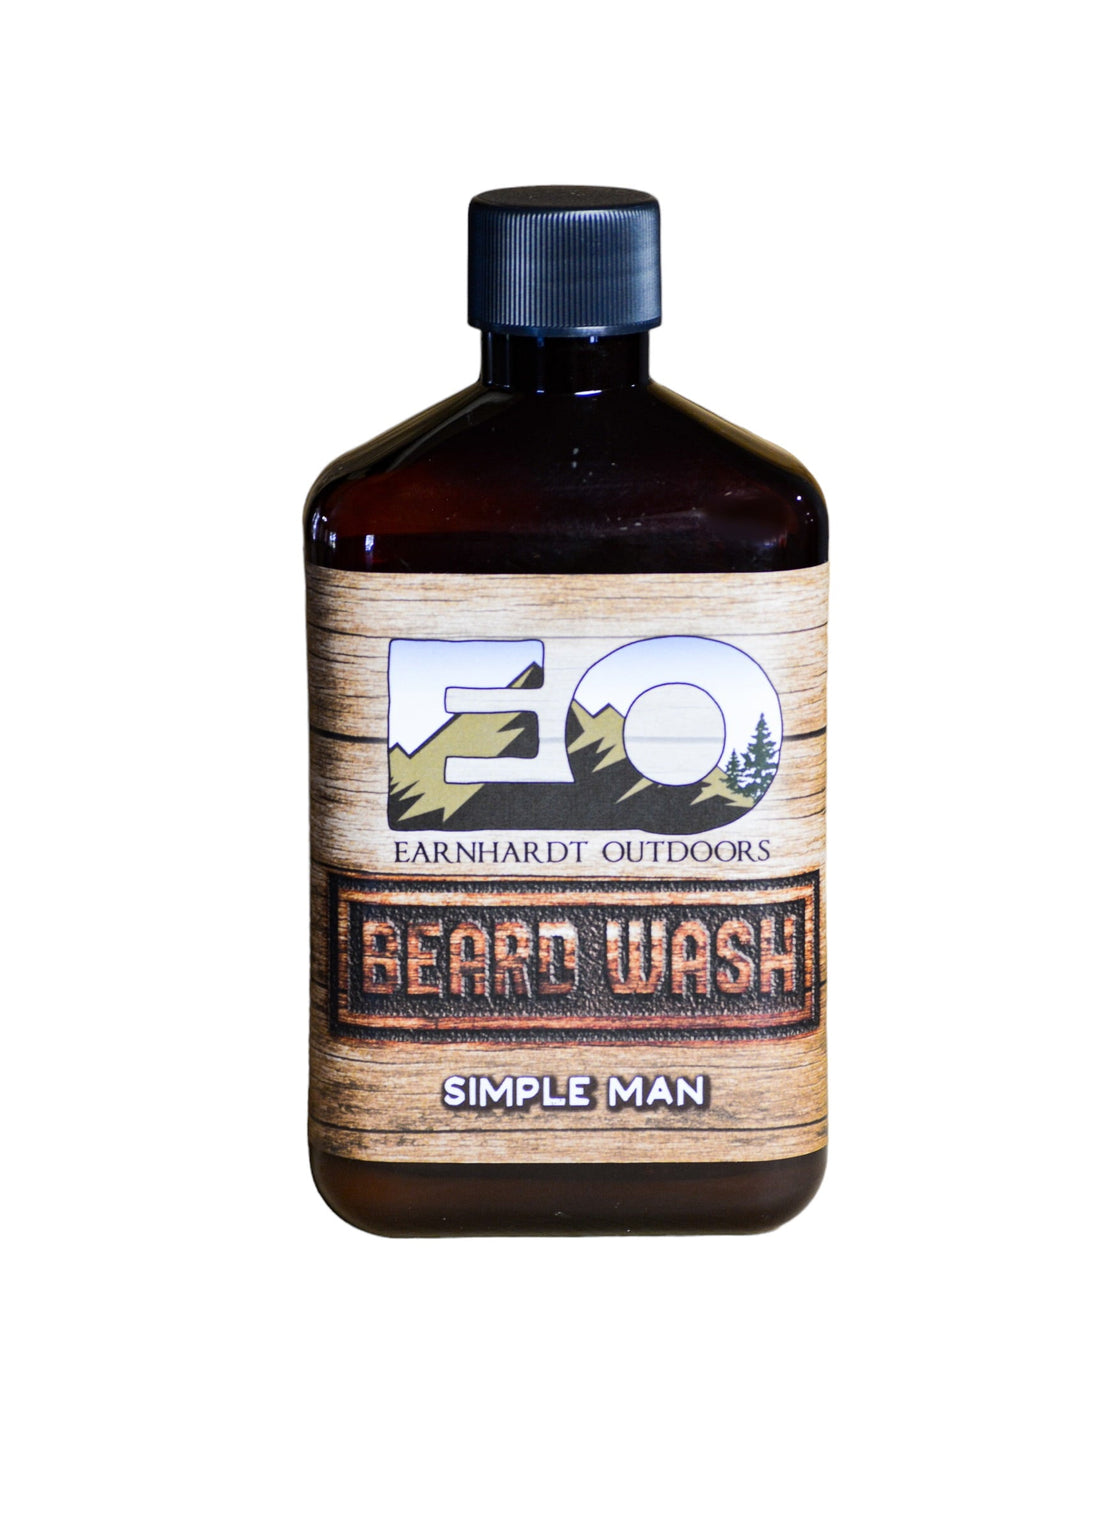 Simple Man Earnhardt Outdoors Beard Wash - Old Town Soap Co.